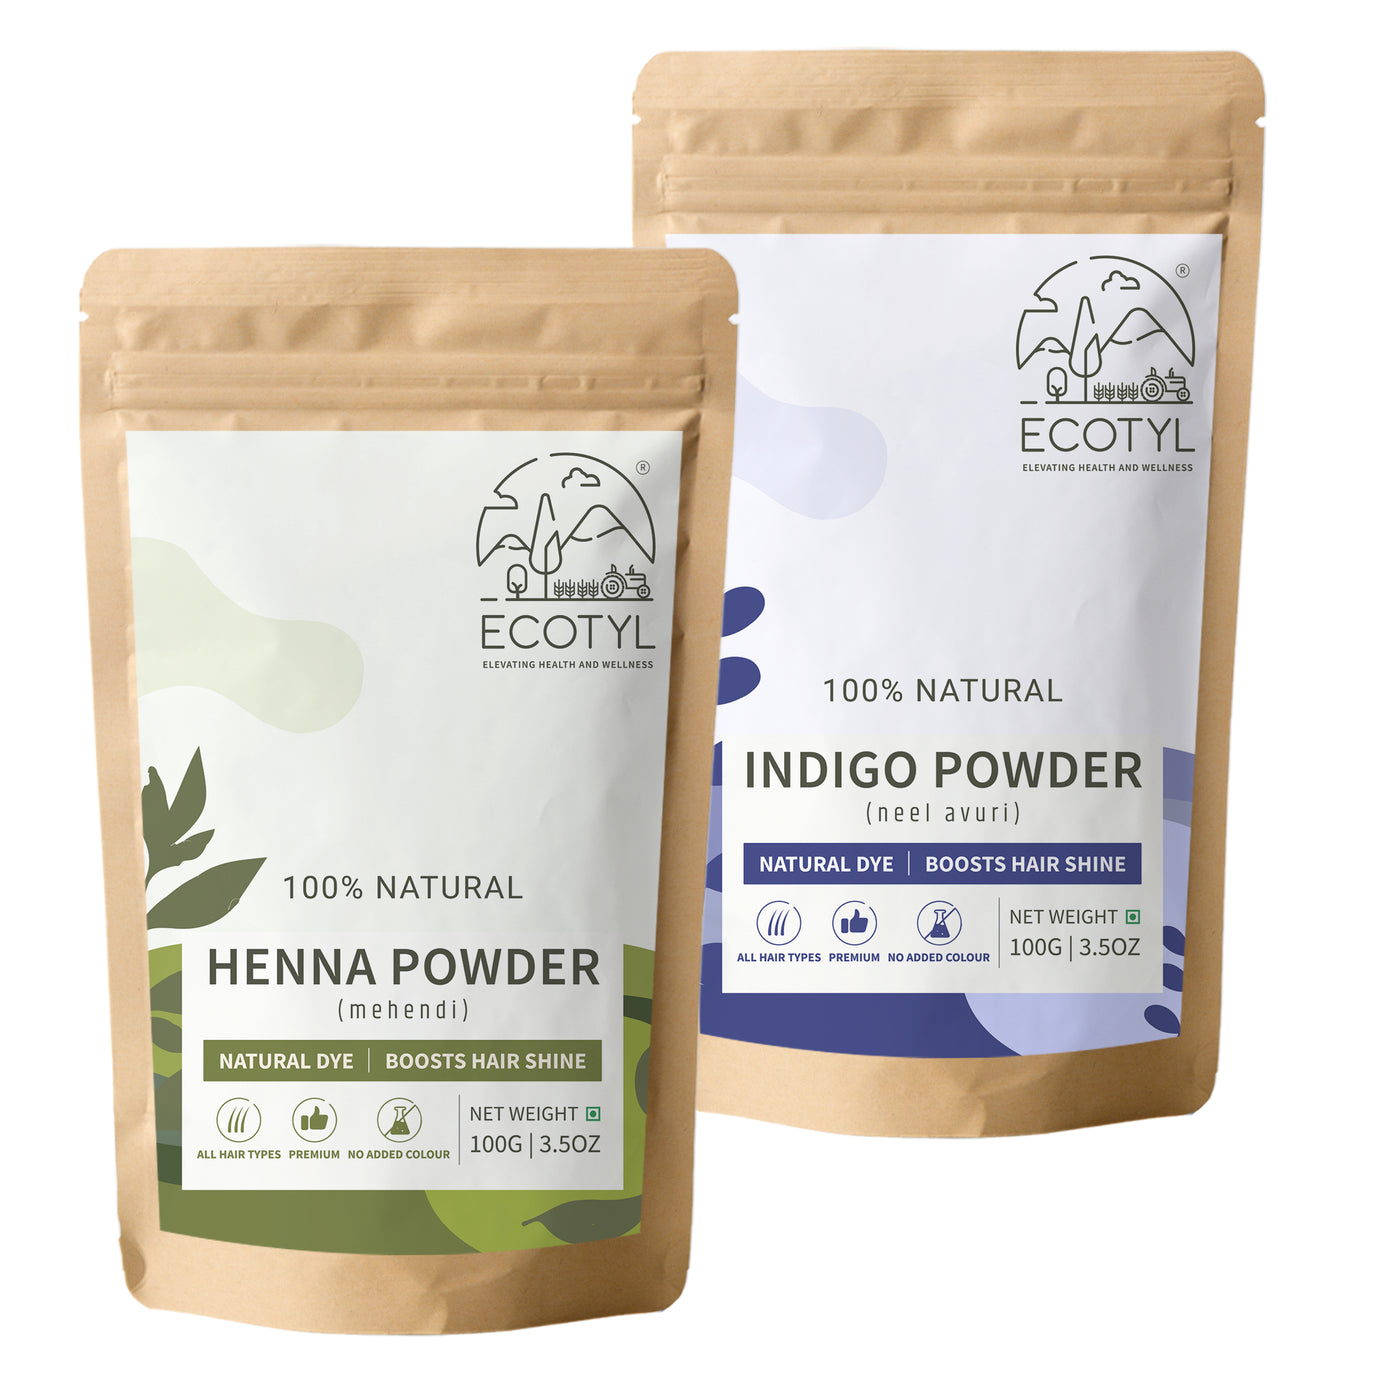 Ecotyl Hair Colour Combo - Henna Powder and Indigo Powder | Natural Hair Dye | 100g Each